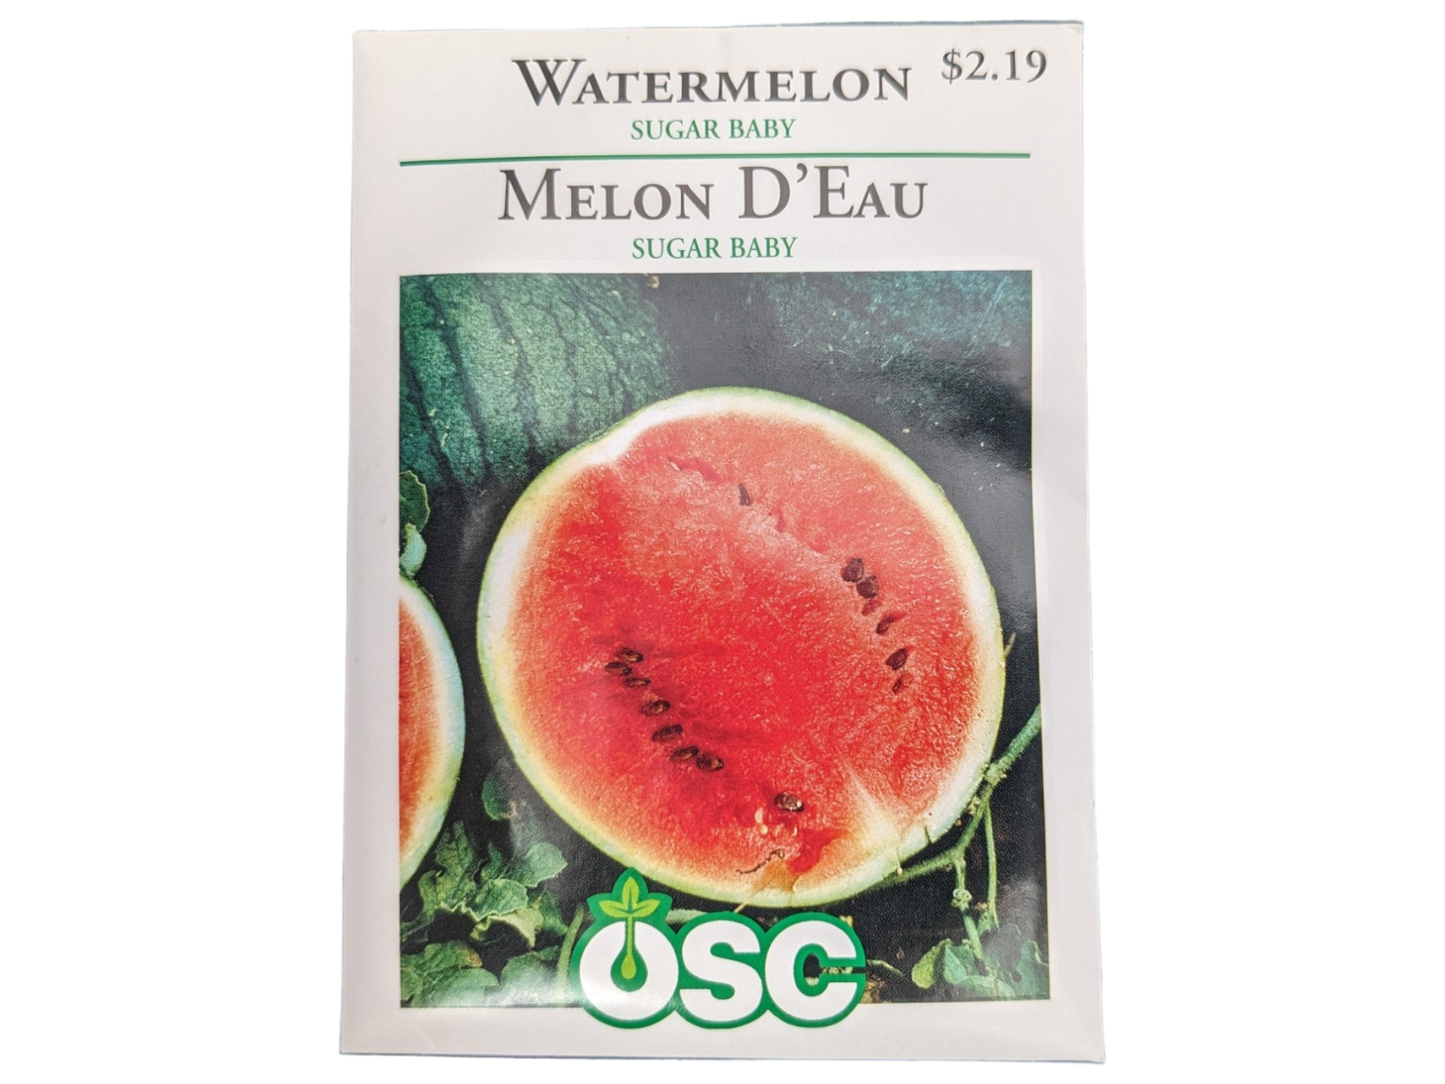 Watermelon Sugar Baby